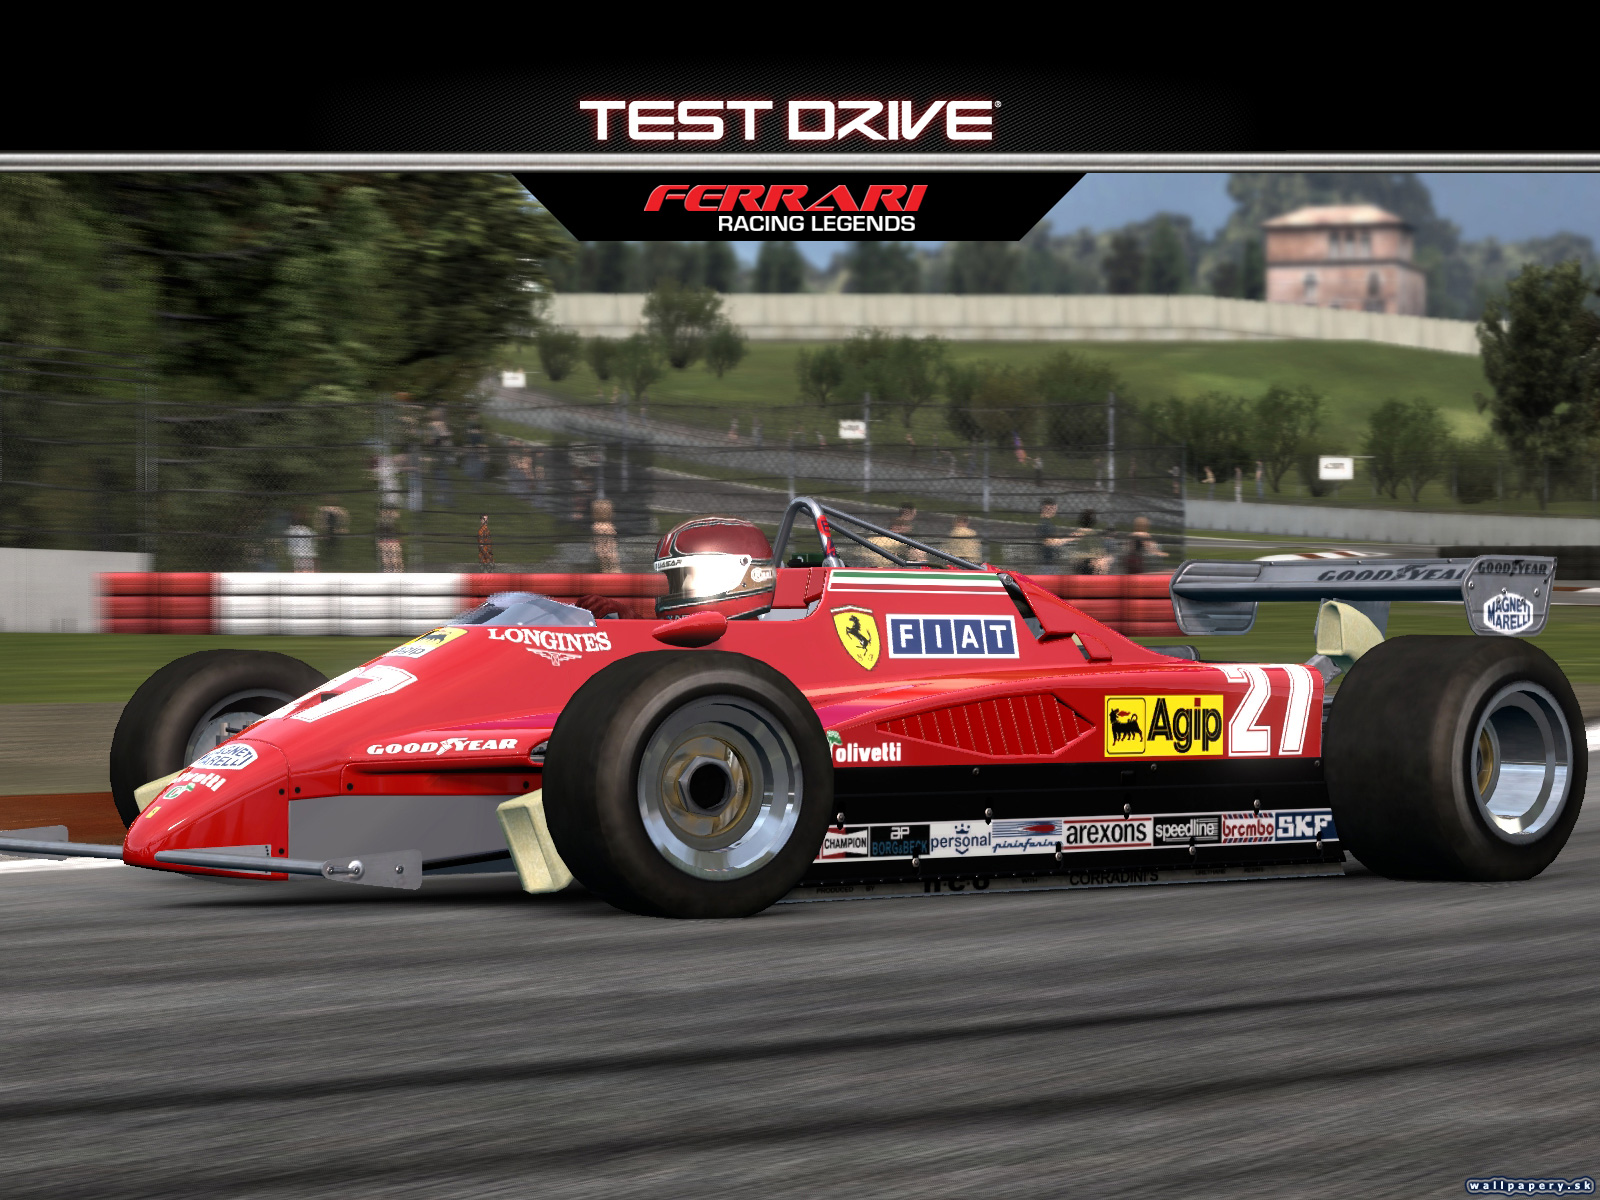 Test Drive: Ferrari Racing Legends - wallpaper 1